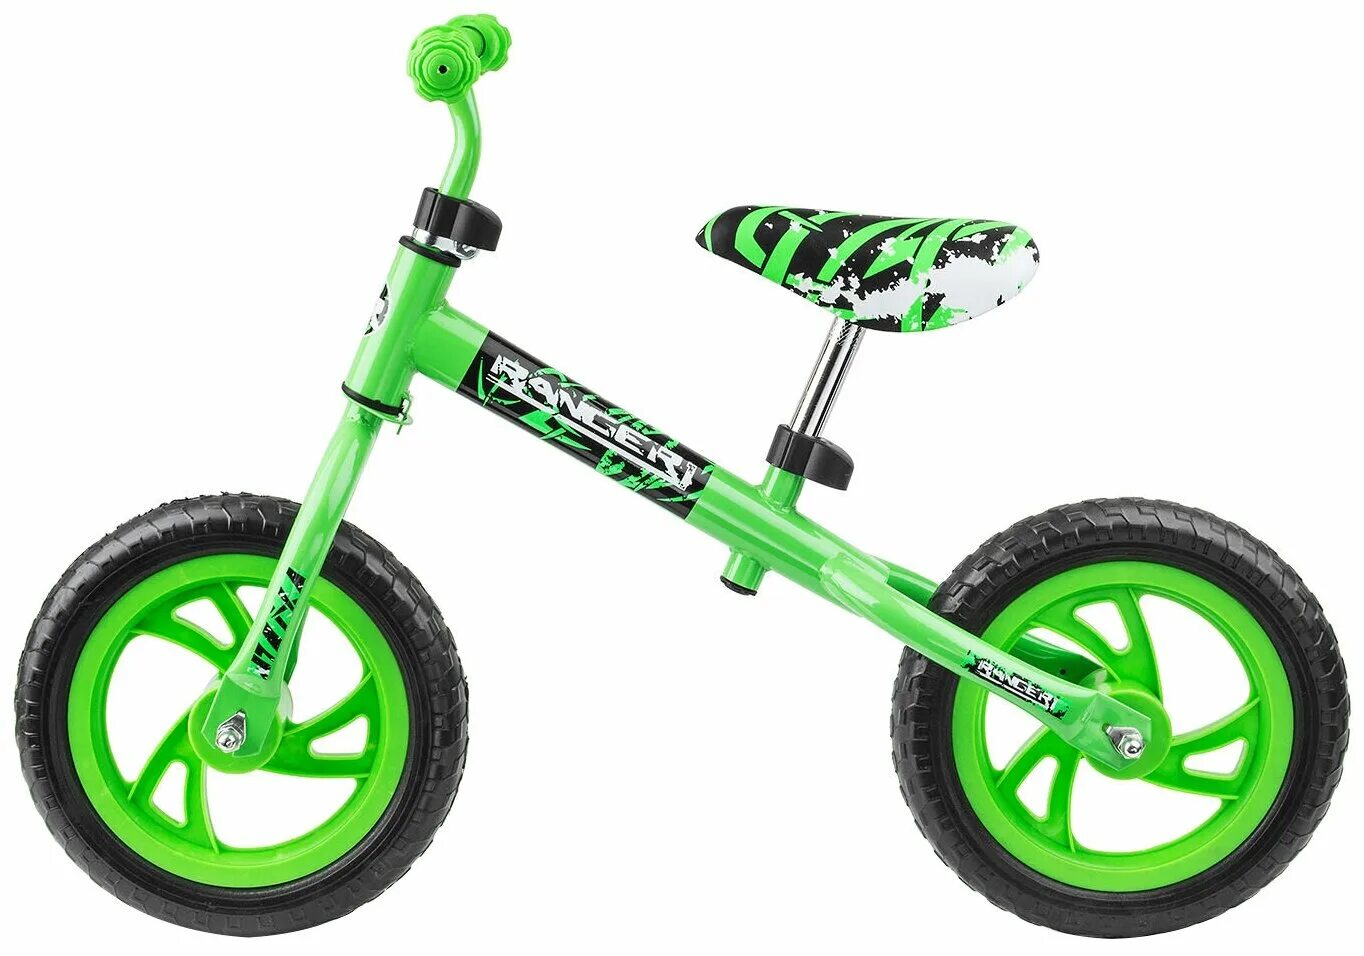 Беговел зеленый. Смайл Райдер беговел. Беговел small Rider. Беговел small Rider Ranger 2 Neon. Small Rider Bike беговел.